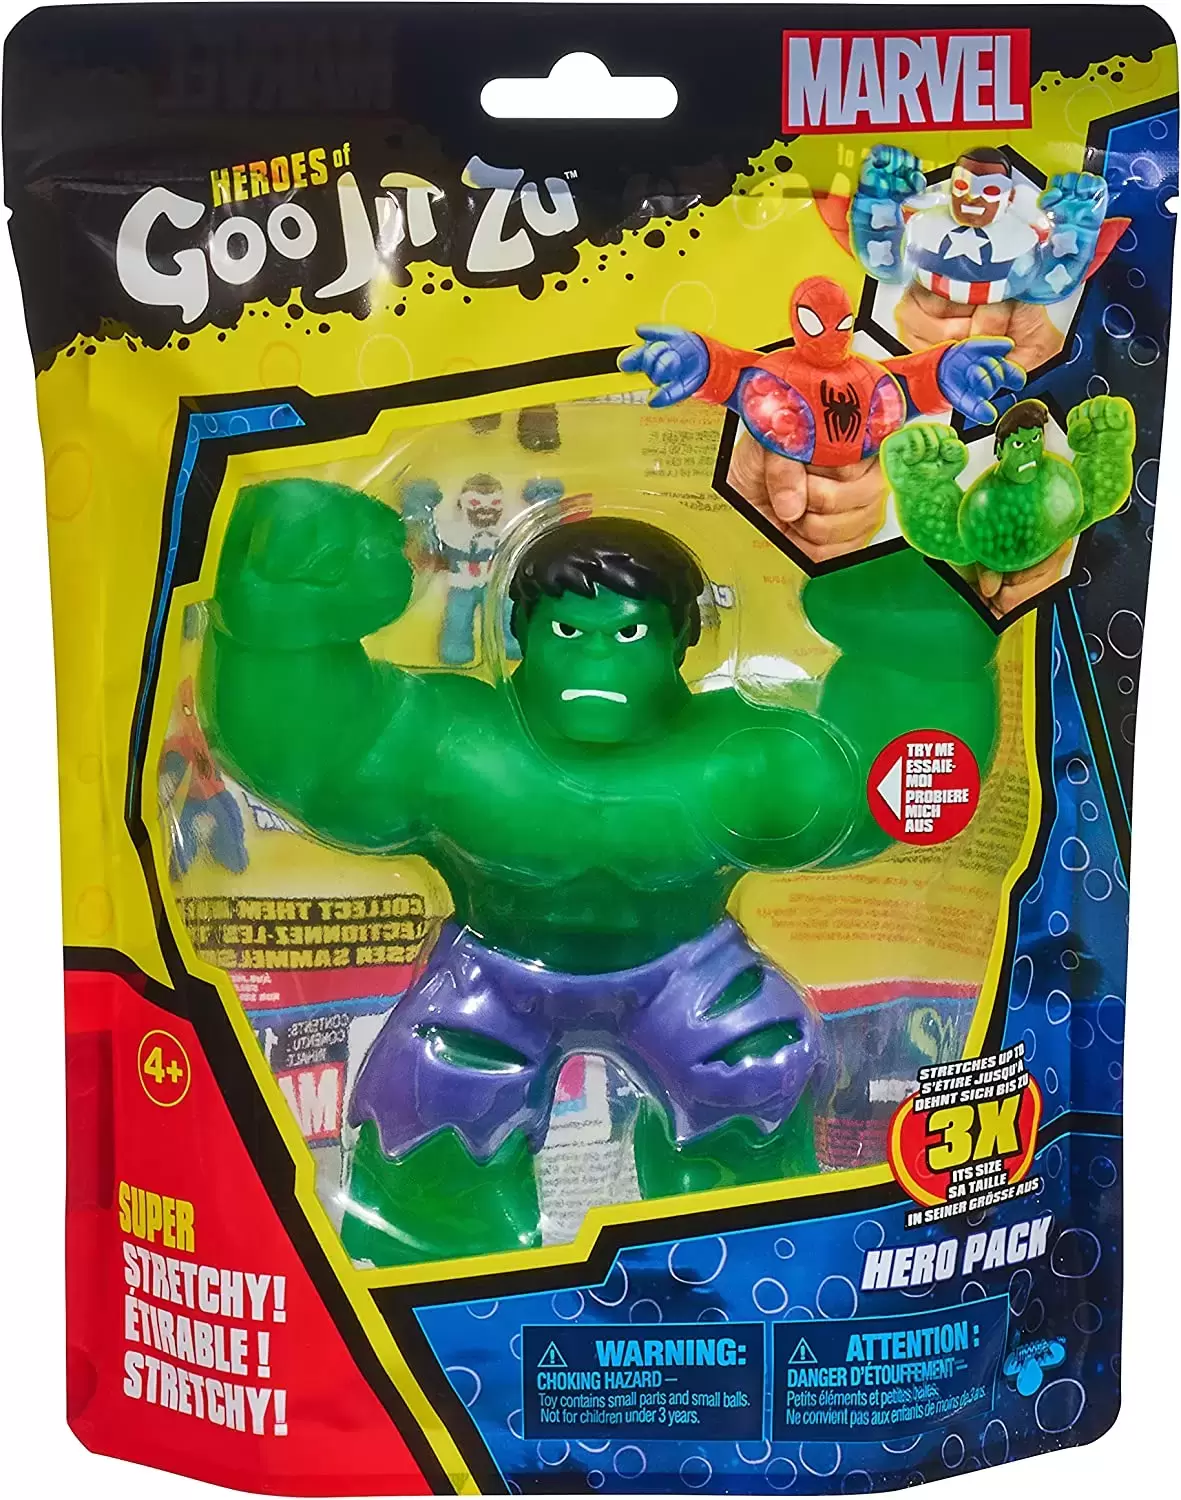 Heroes of Goo Jit Zu - Marvel - The Incredible Hulk